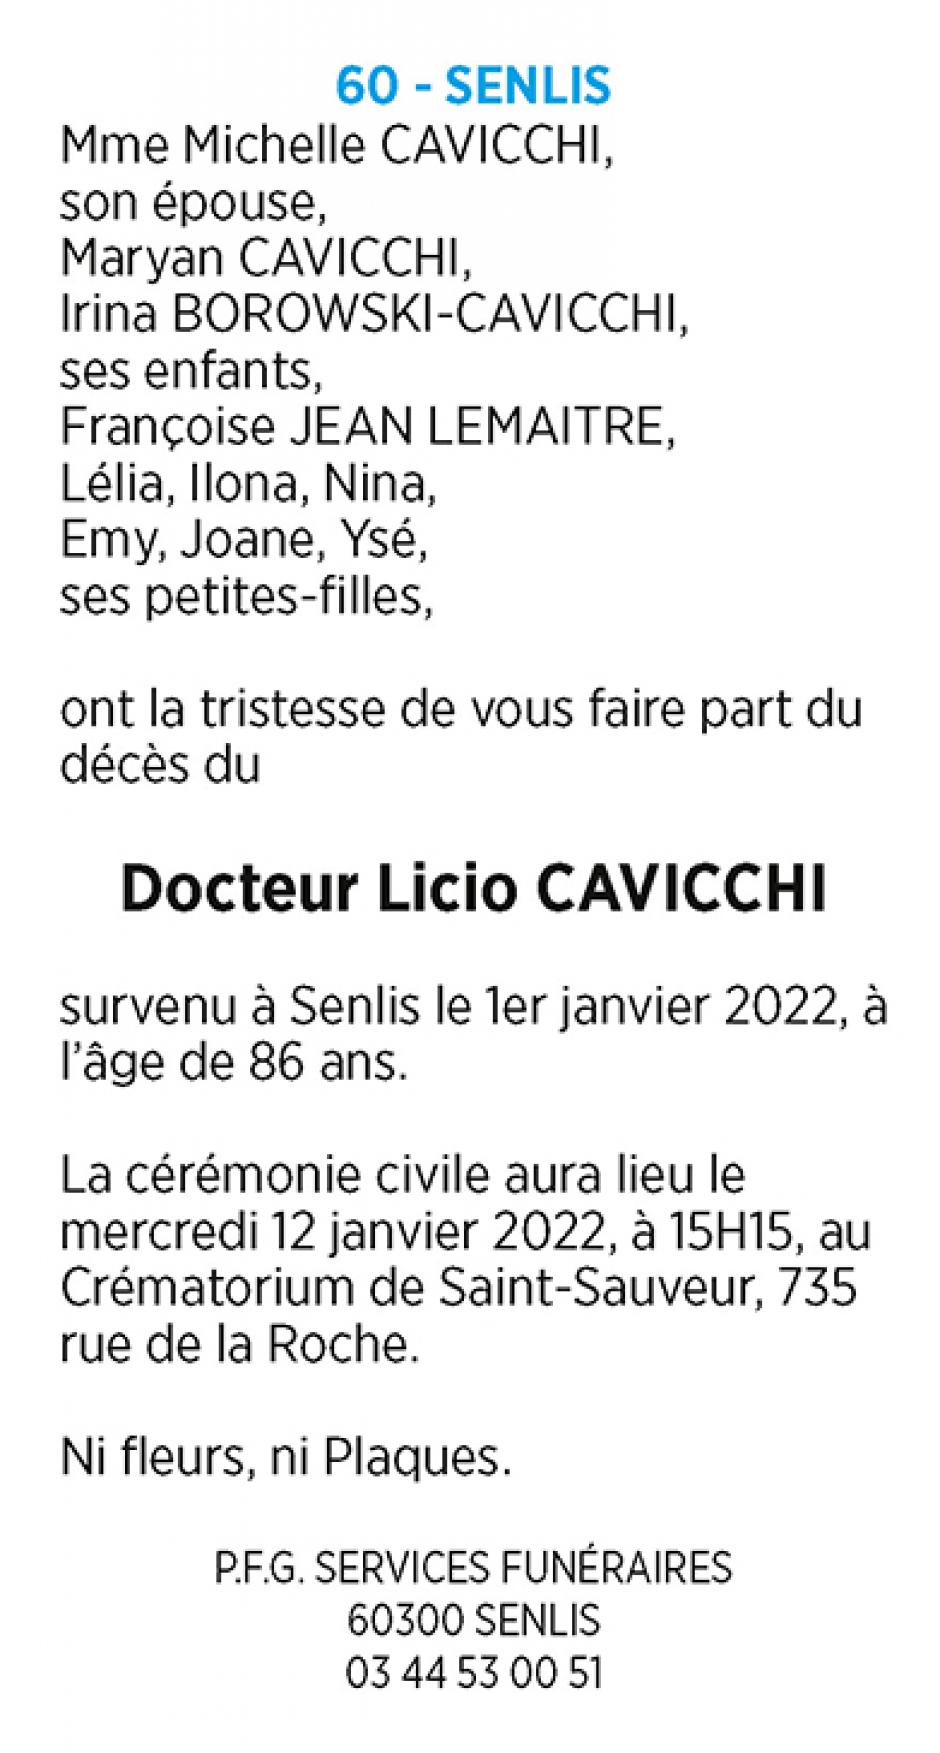 Avis de décès de Licio Cavicchi - Le Parisien, 10 janvier 2022